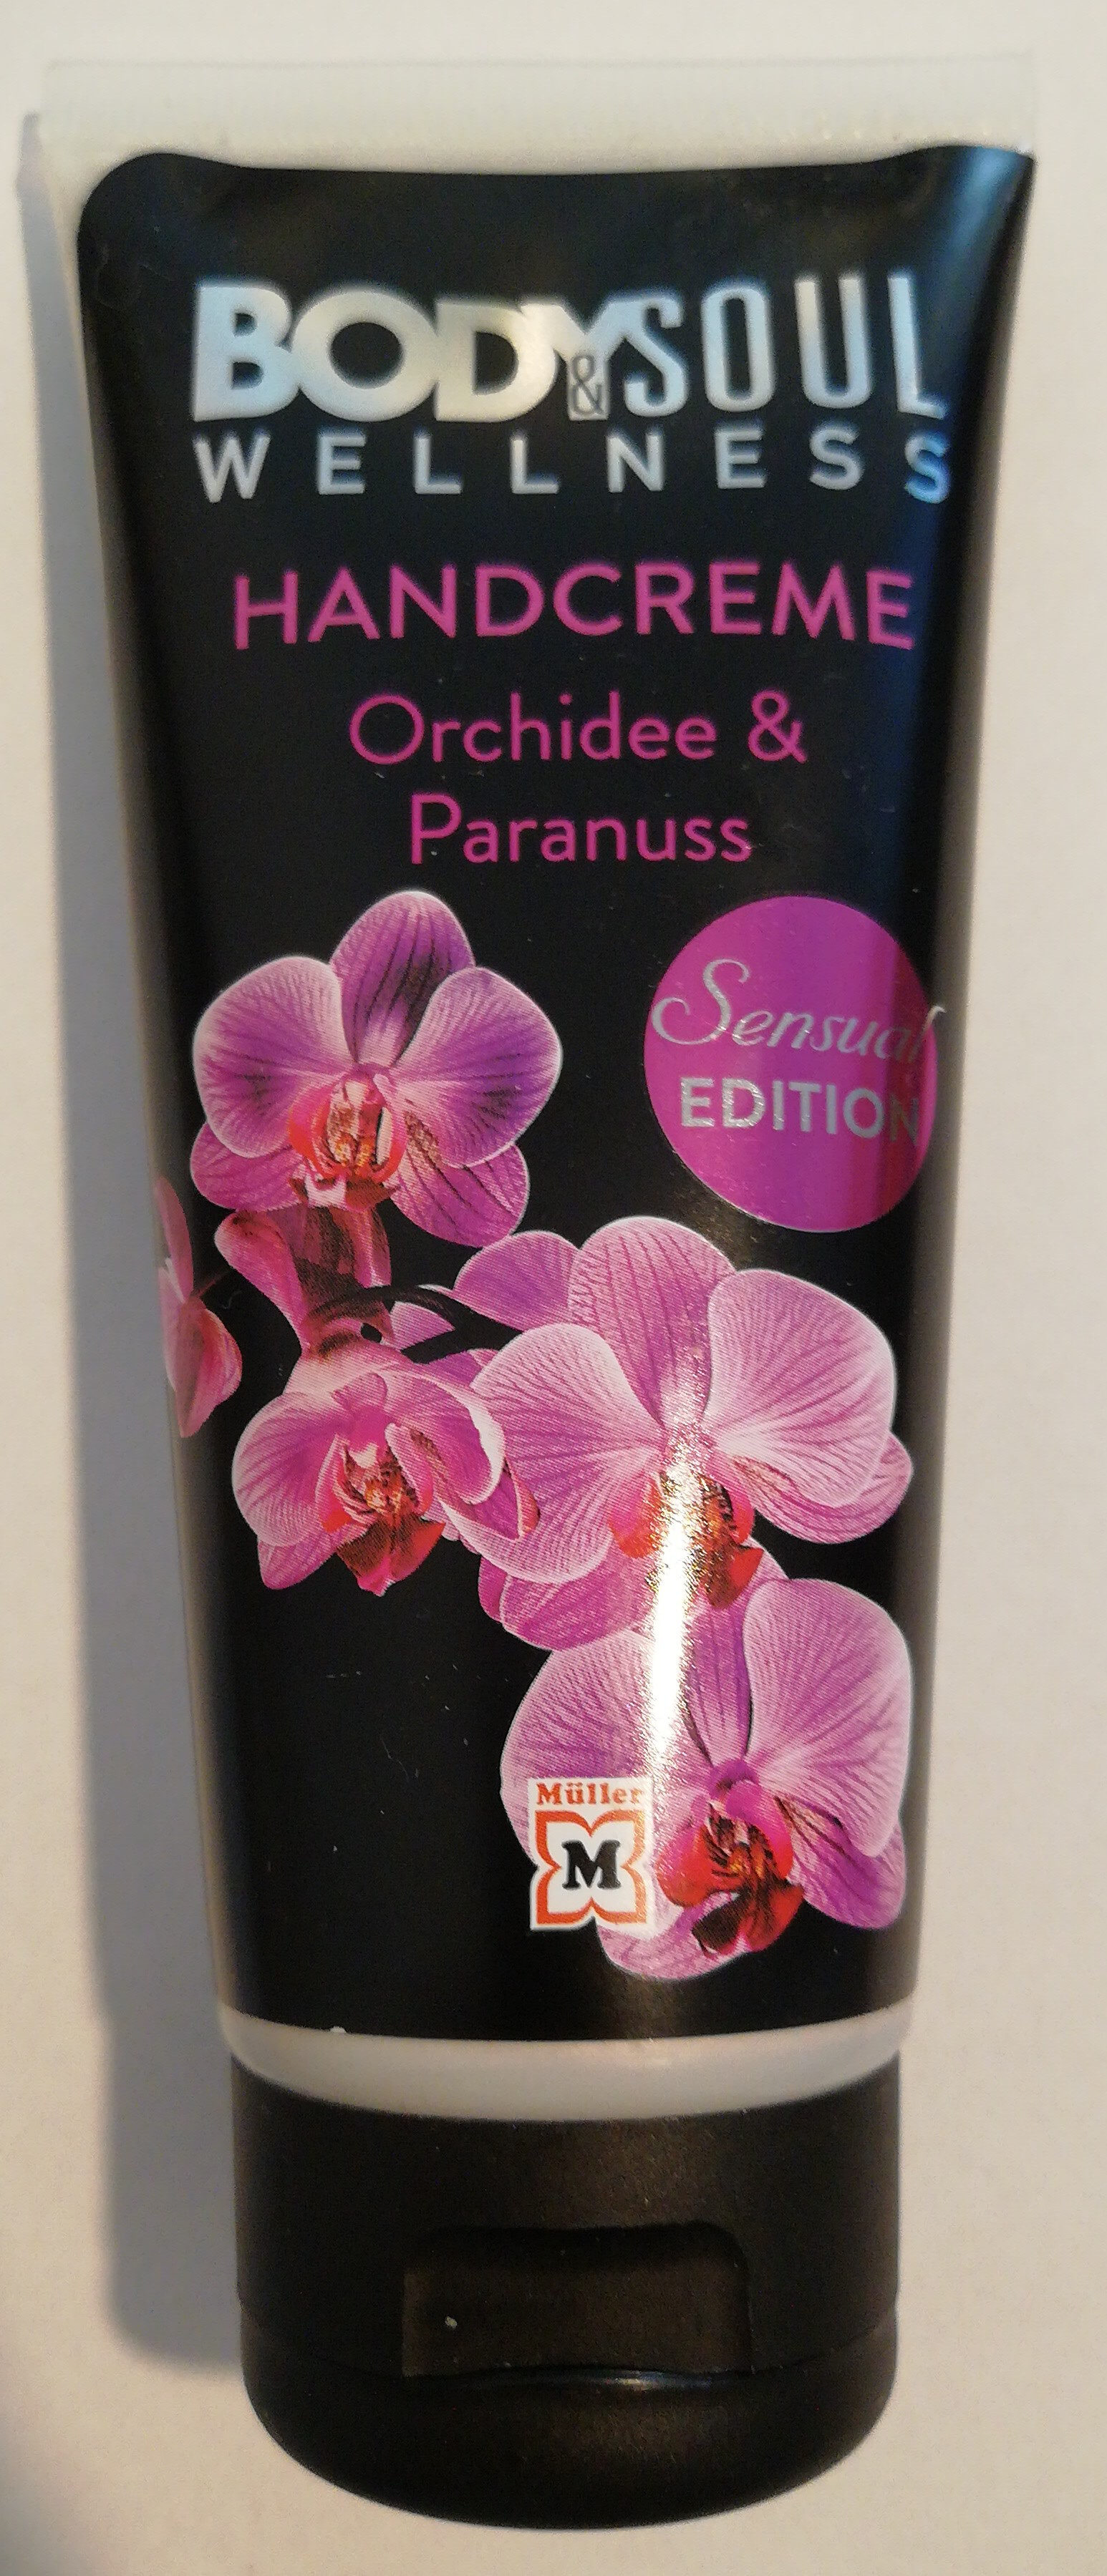 Orchidee & Paranuss Sensual Edition - Product - de